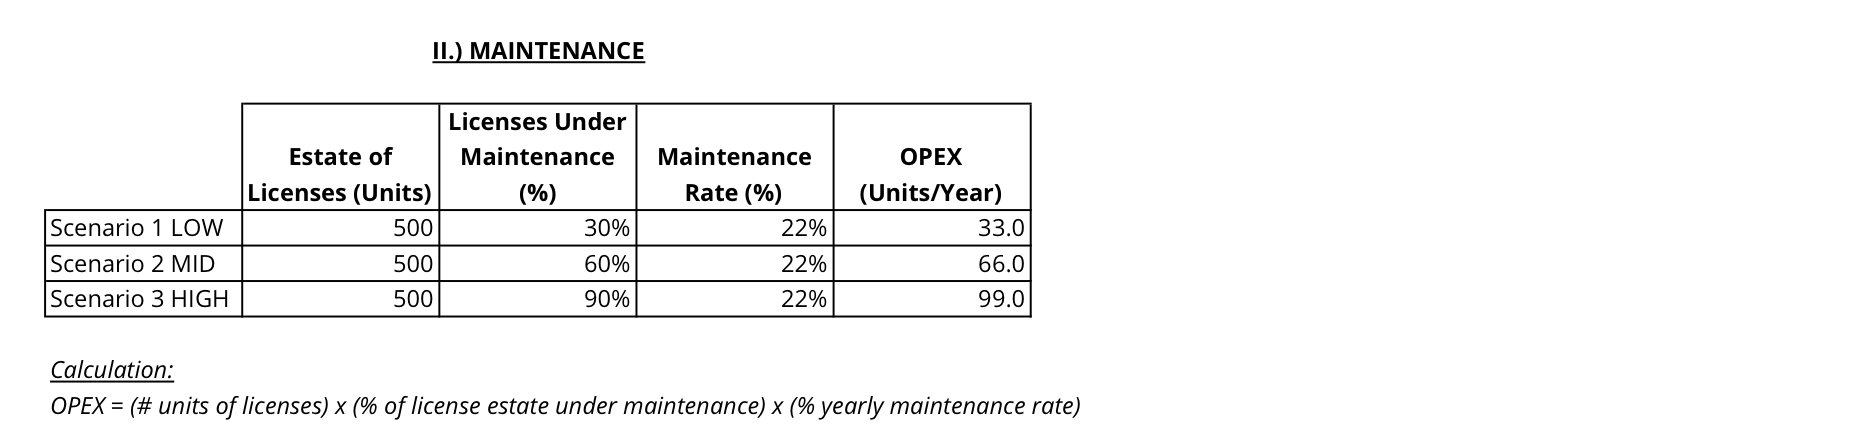 Exhibit B - Maintenance On Licenses OPEX